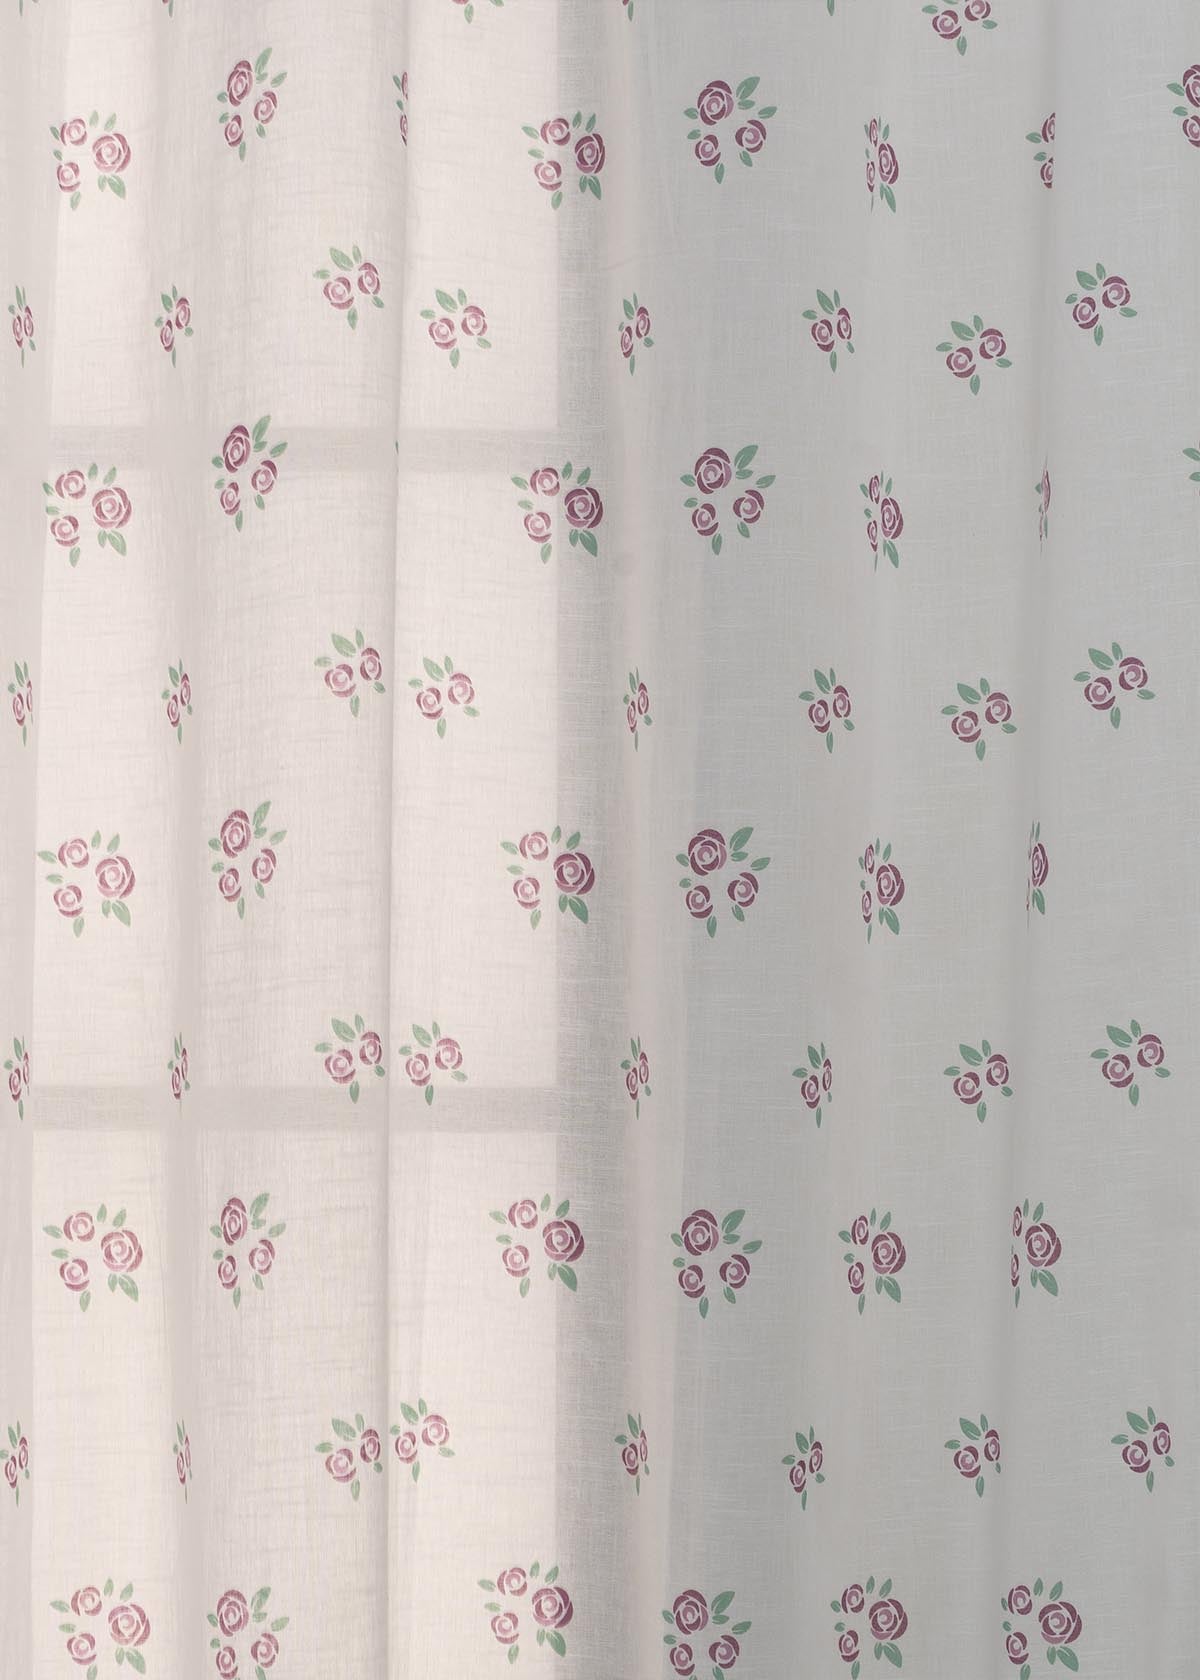 Rose Garden 100% Customizable Cotton Sheer floral curtain for Living room - Light filtering - Lavender